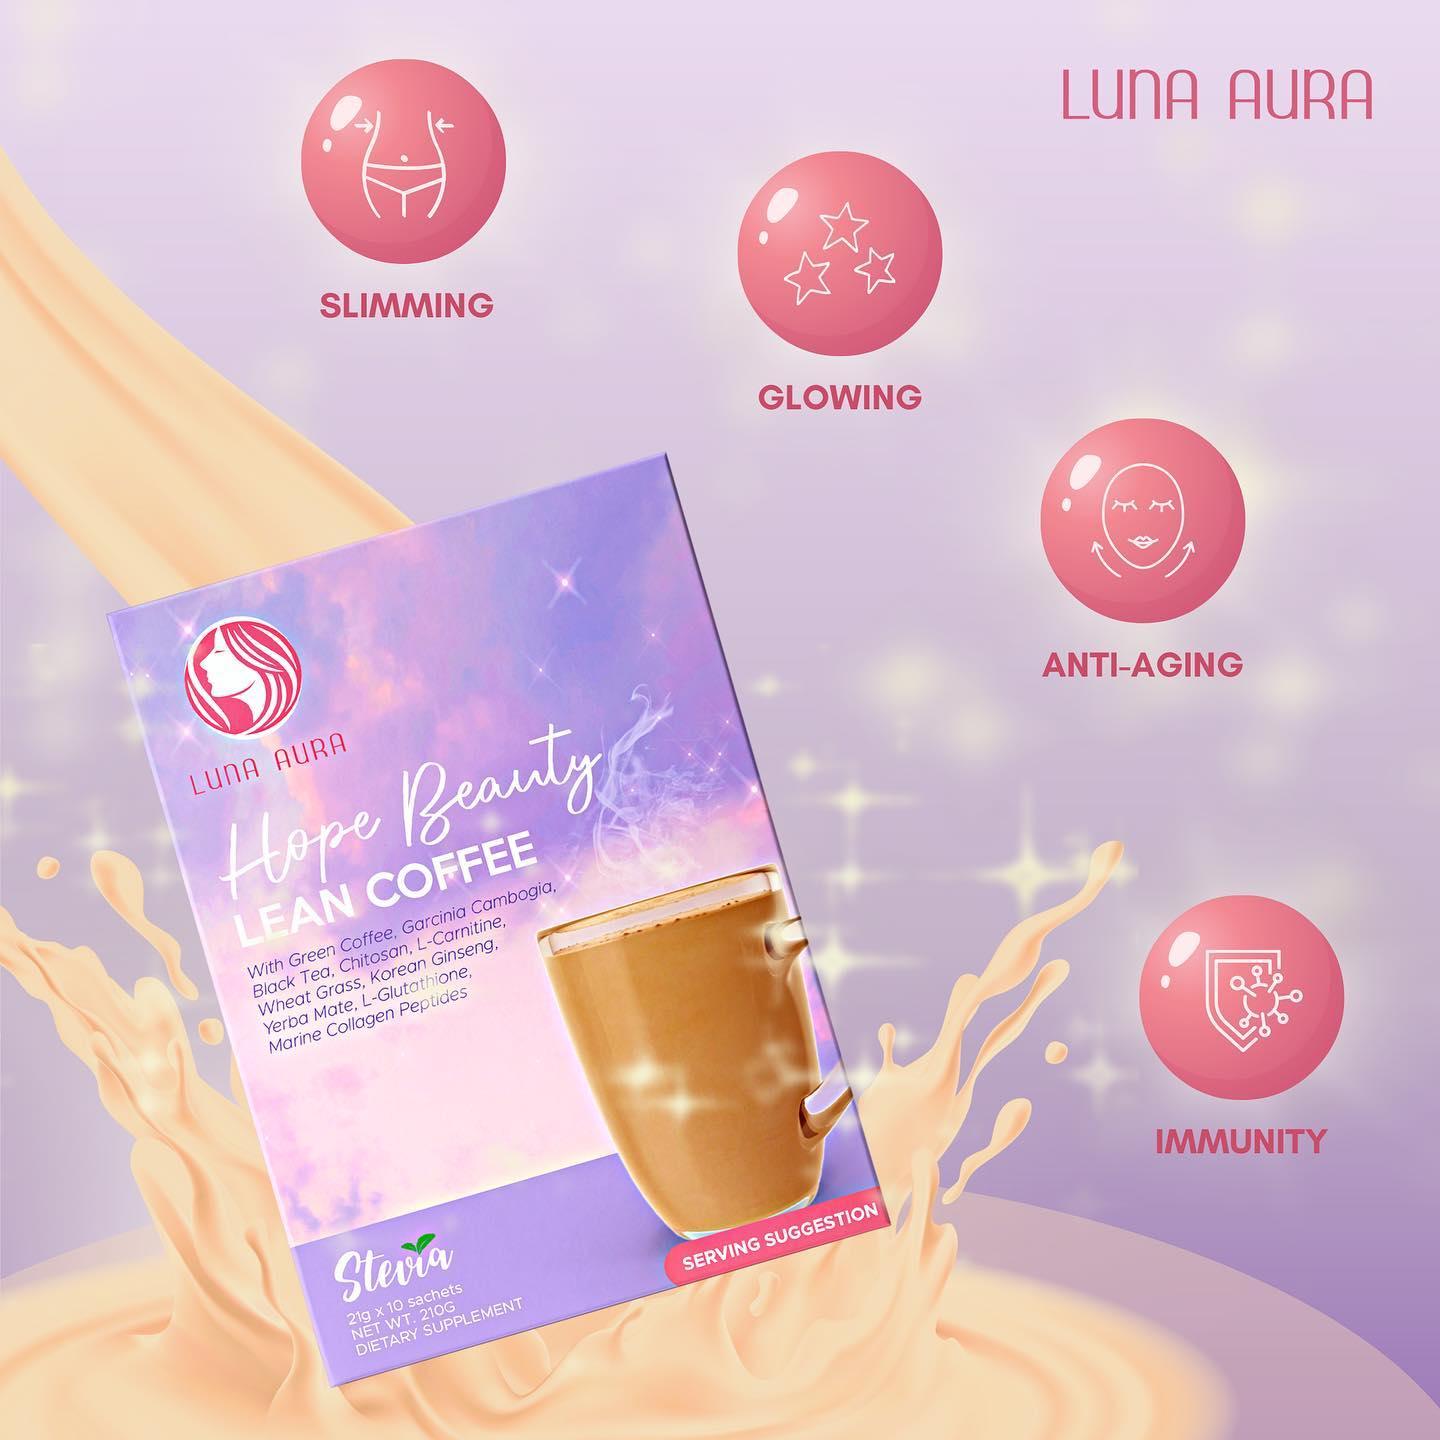 Luna Aura Hope Beauty Lean Coffee (PREORDER) - Astrid & Rose